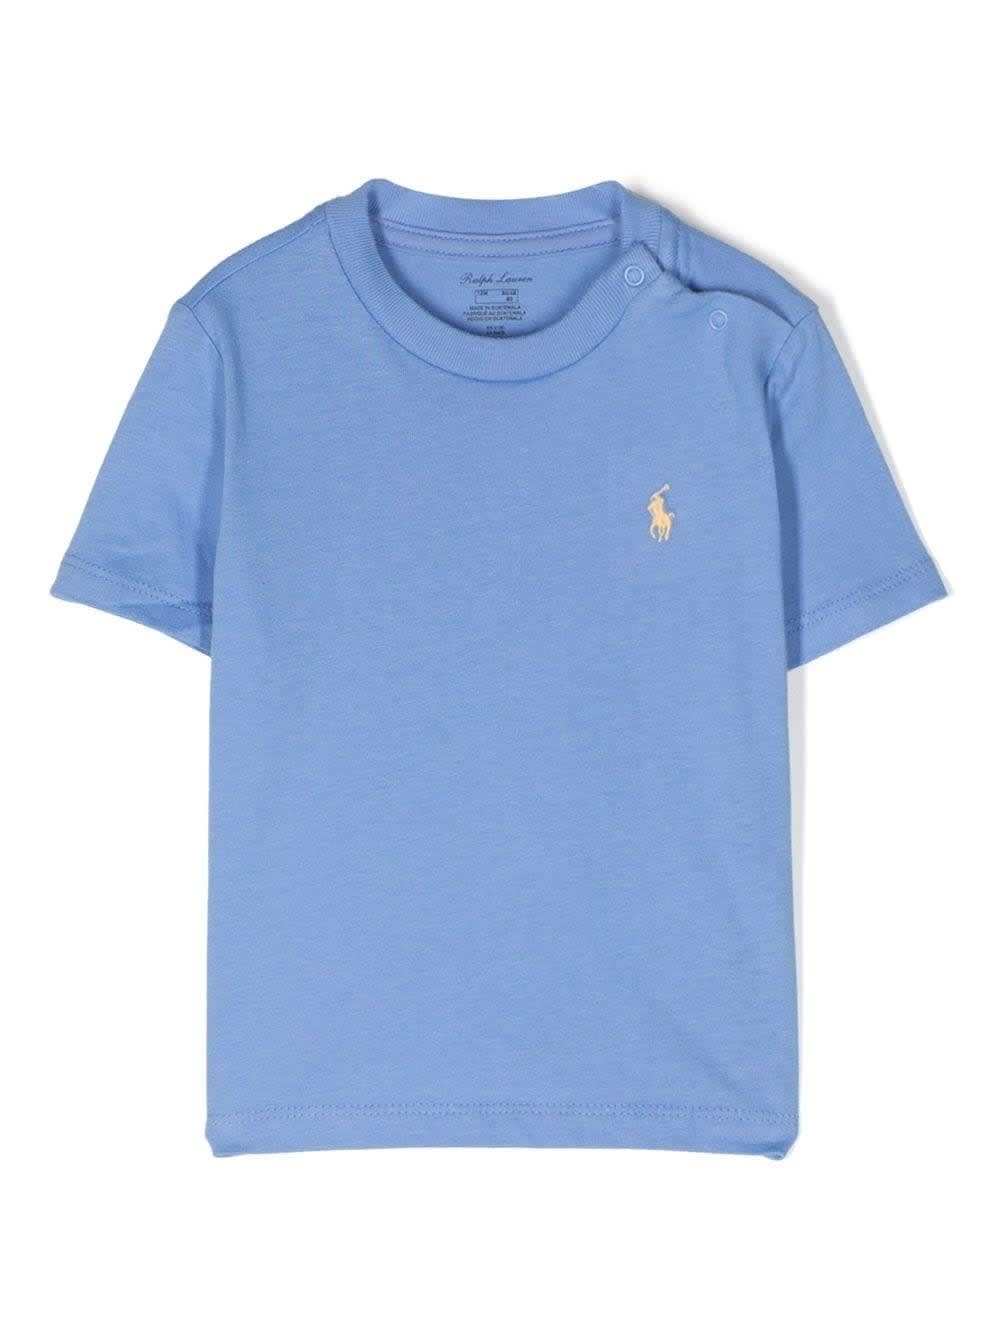 Ralph Lauren Light Blue T-shirt With Yellow Pony